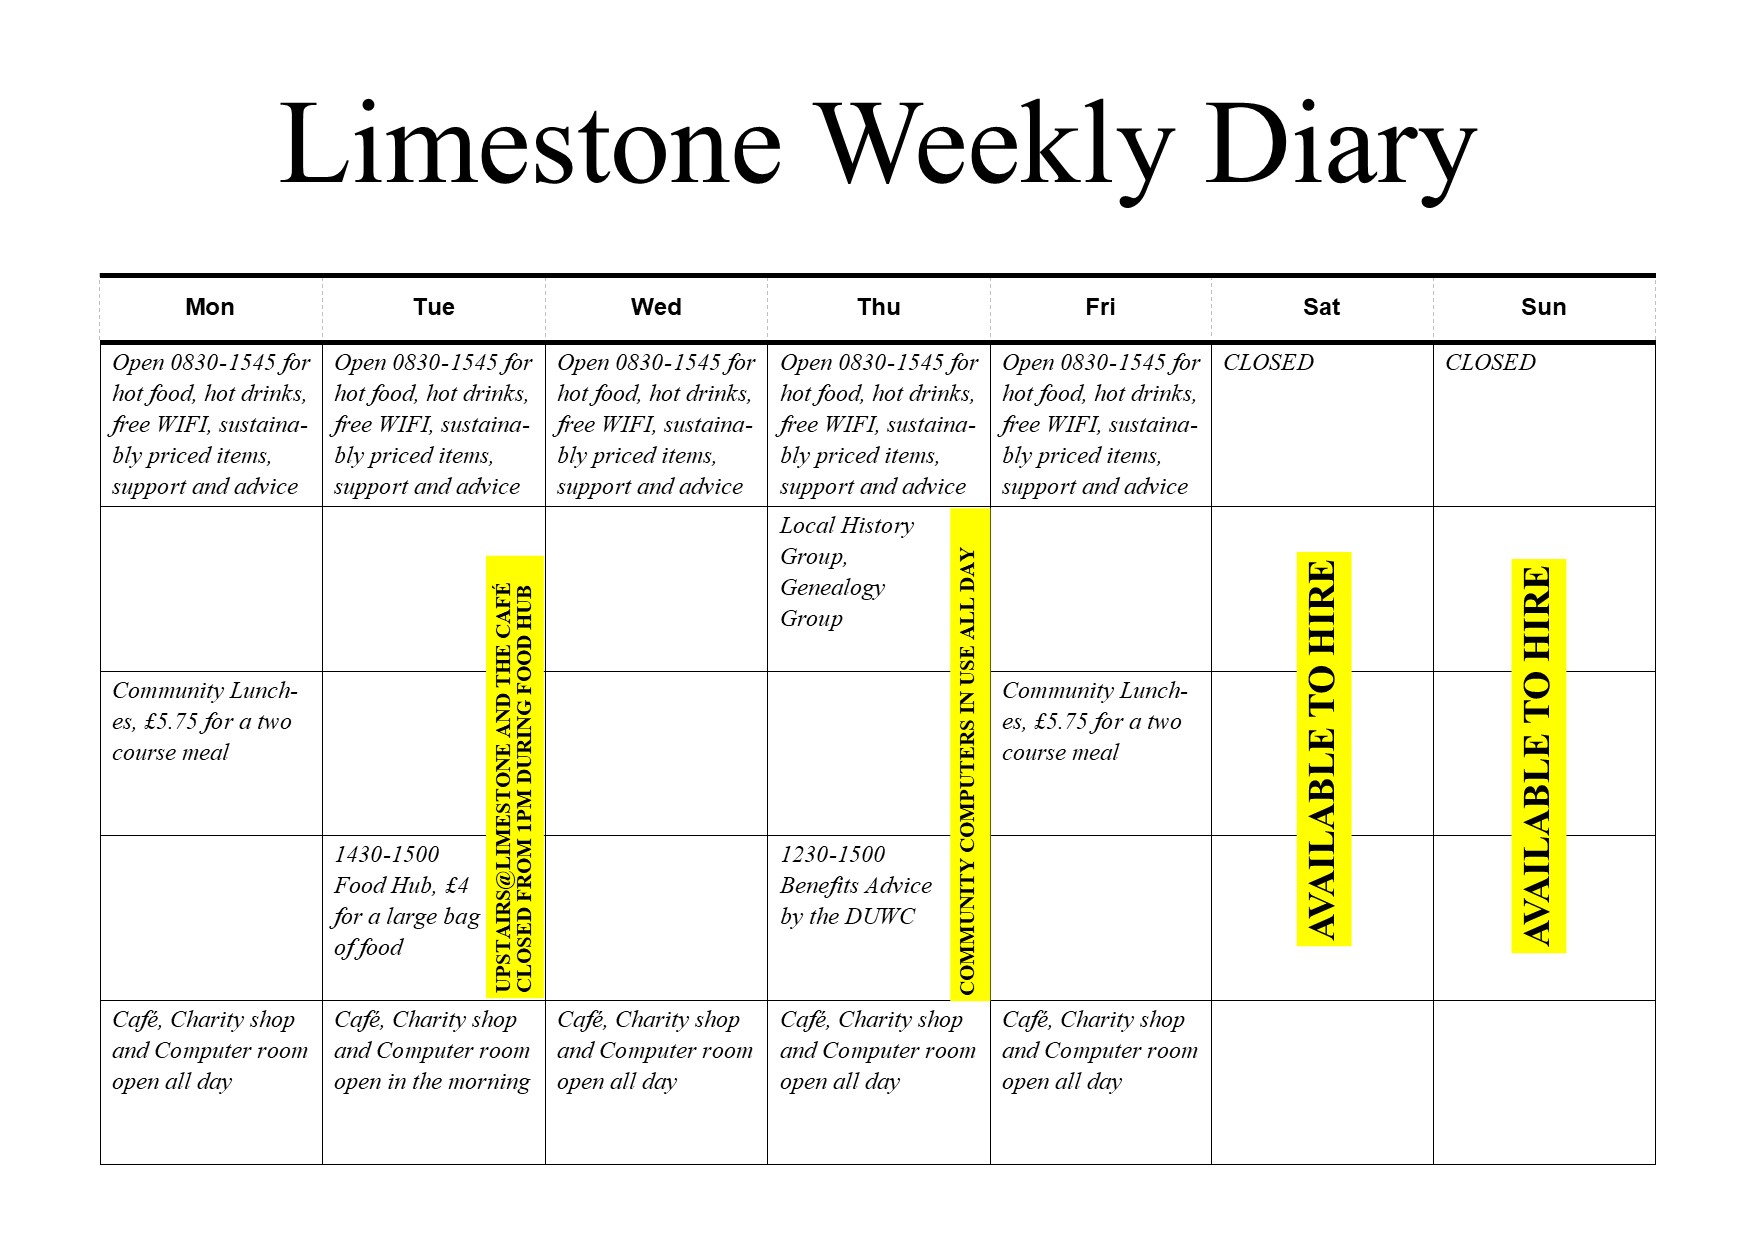 Limestone weekly Diary